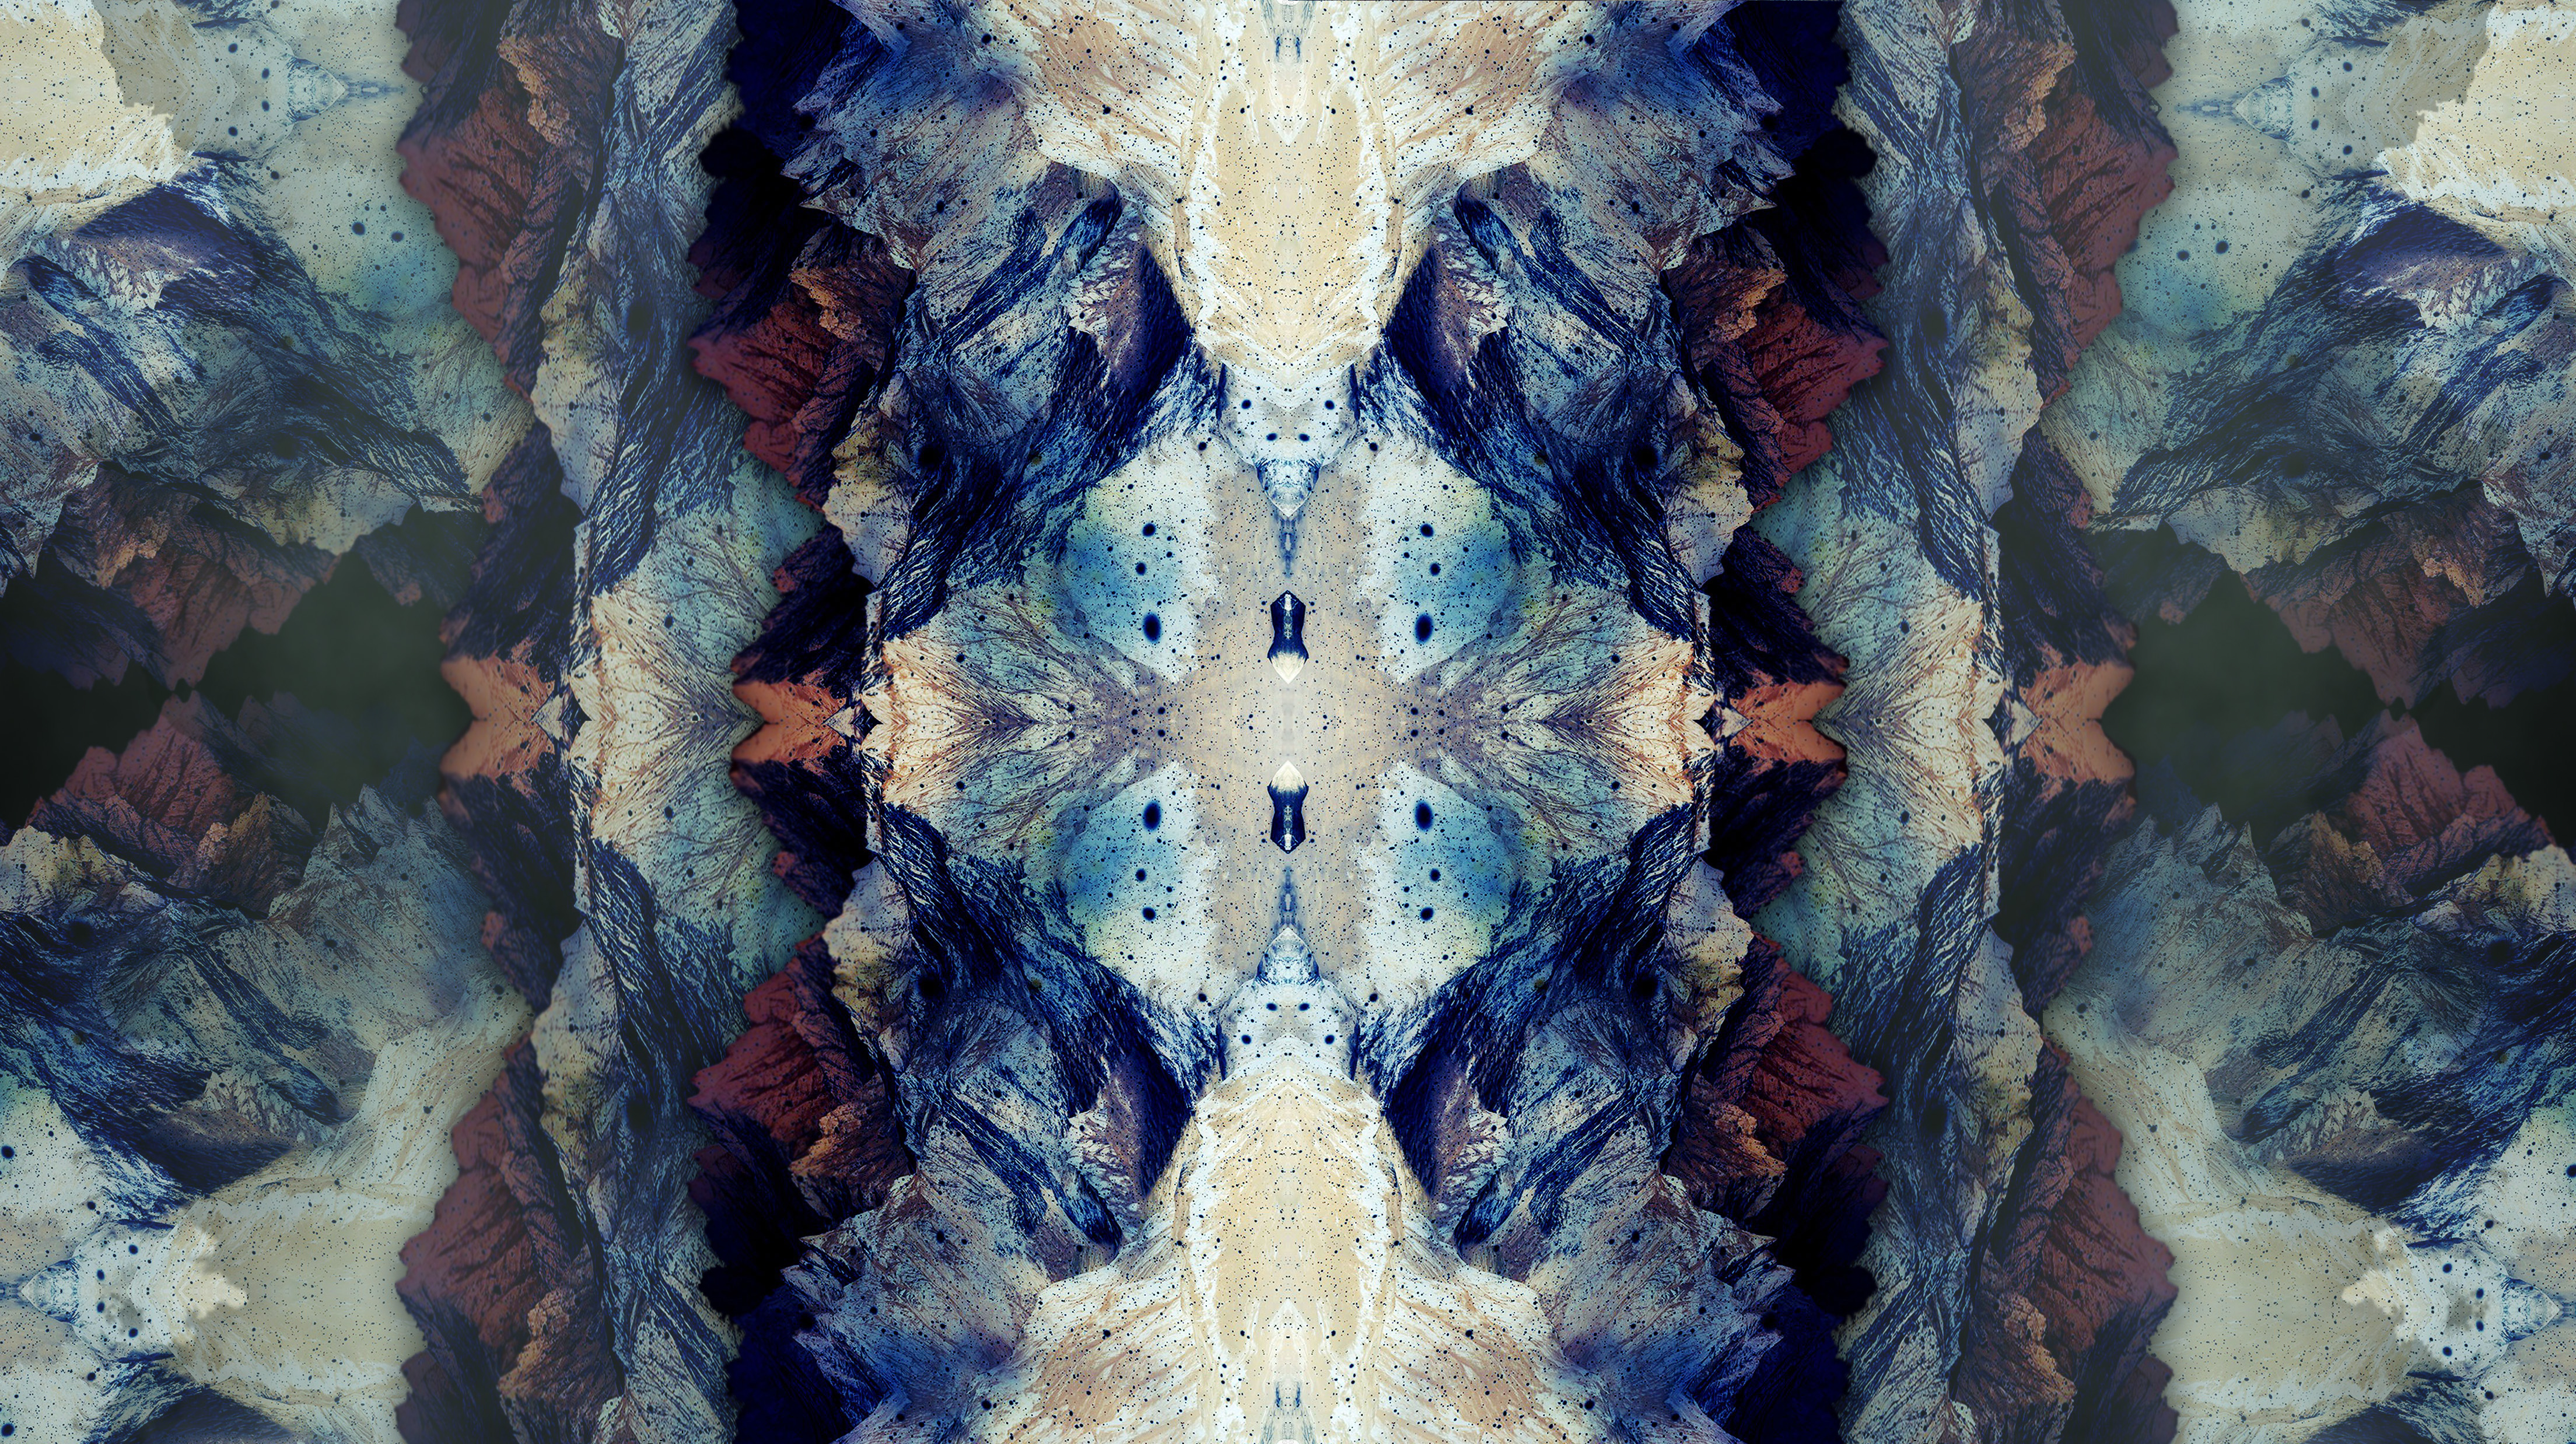 Abstract Digital Art Artwork Mirrored Symmetry 4416x2476